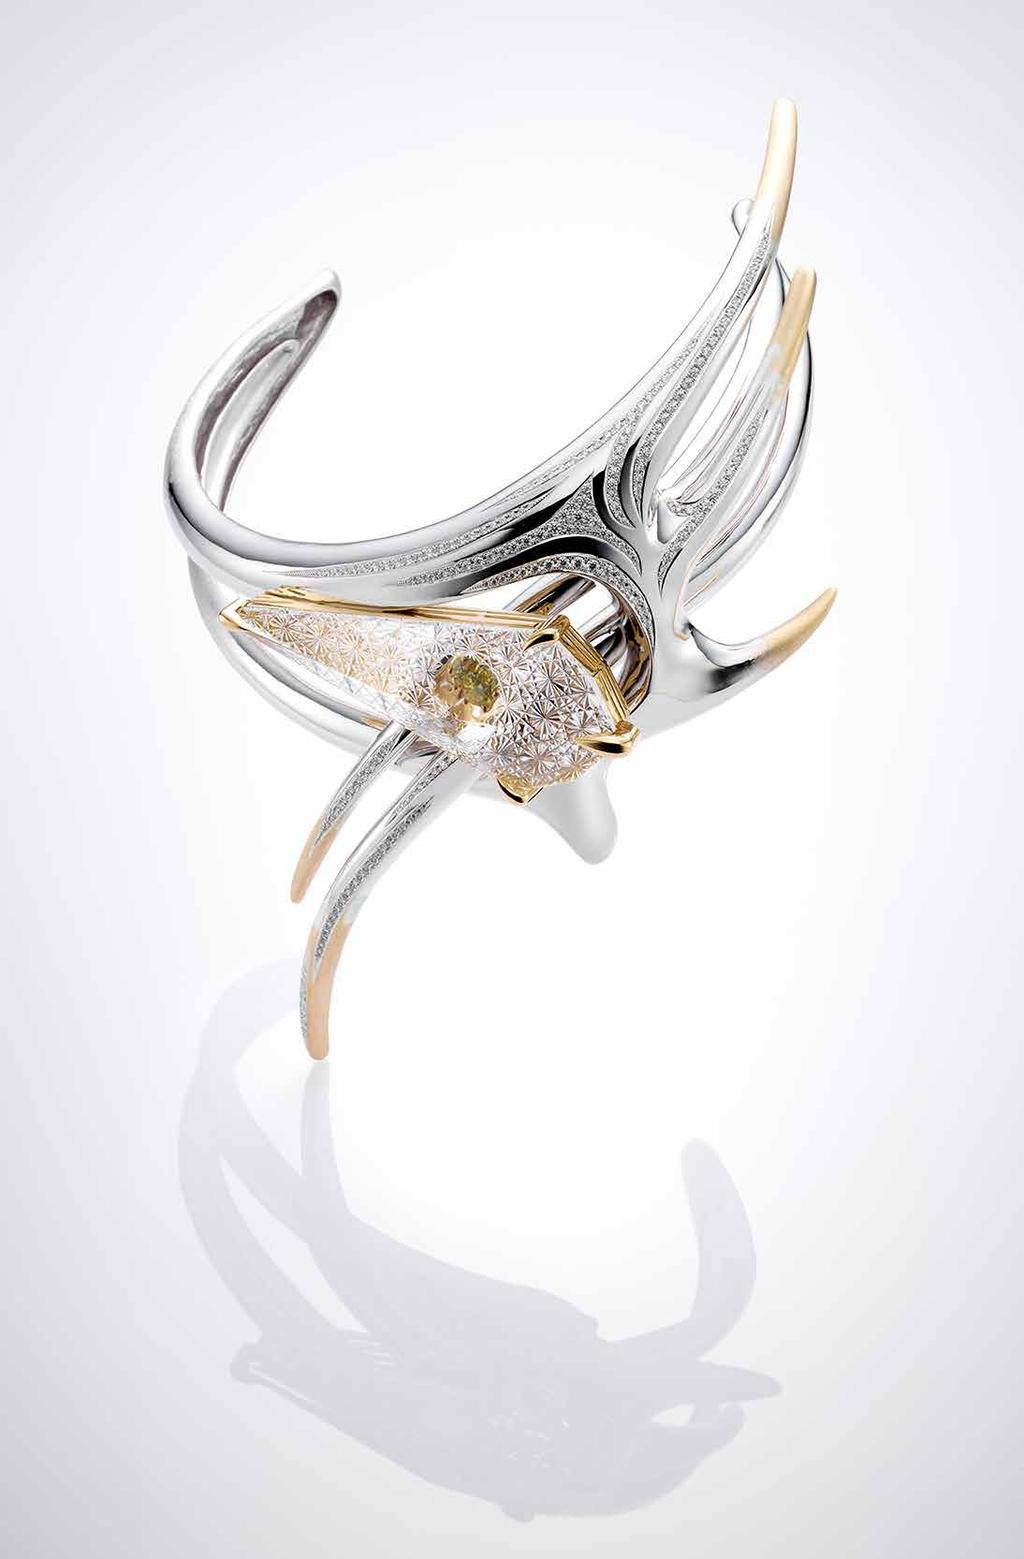 Krystallo choker necklace in 18K white gold and silver 925, set with Edo Kiriko cut glass and diamonds. POA.